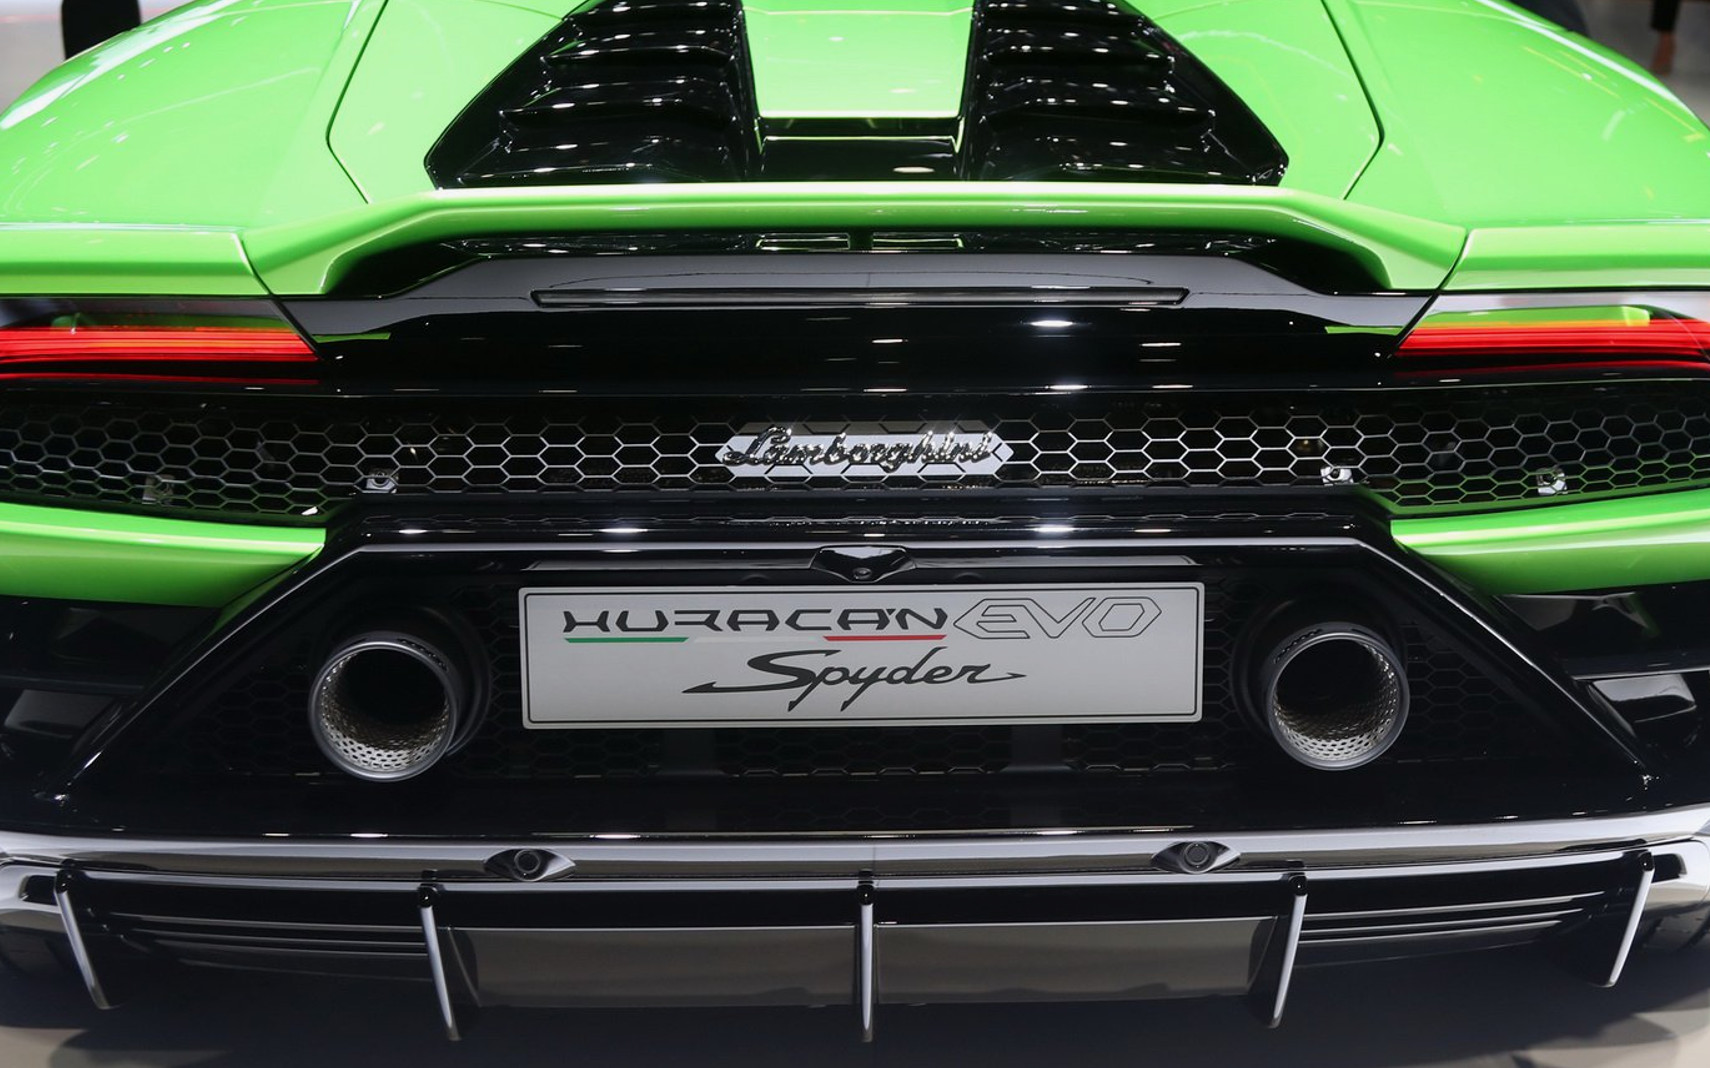 Lamborghini Huracán Evo Spyder